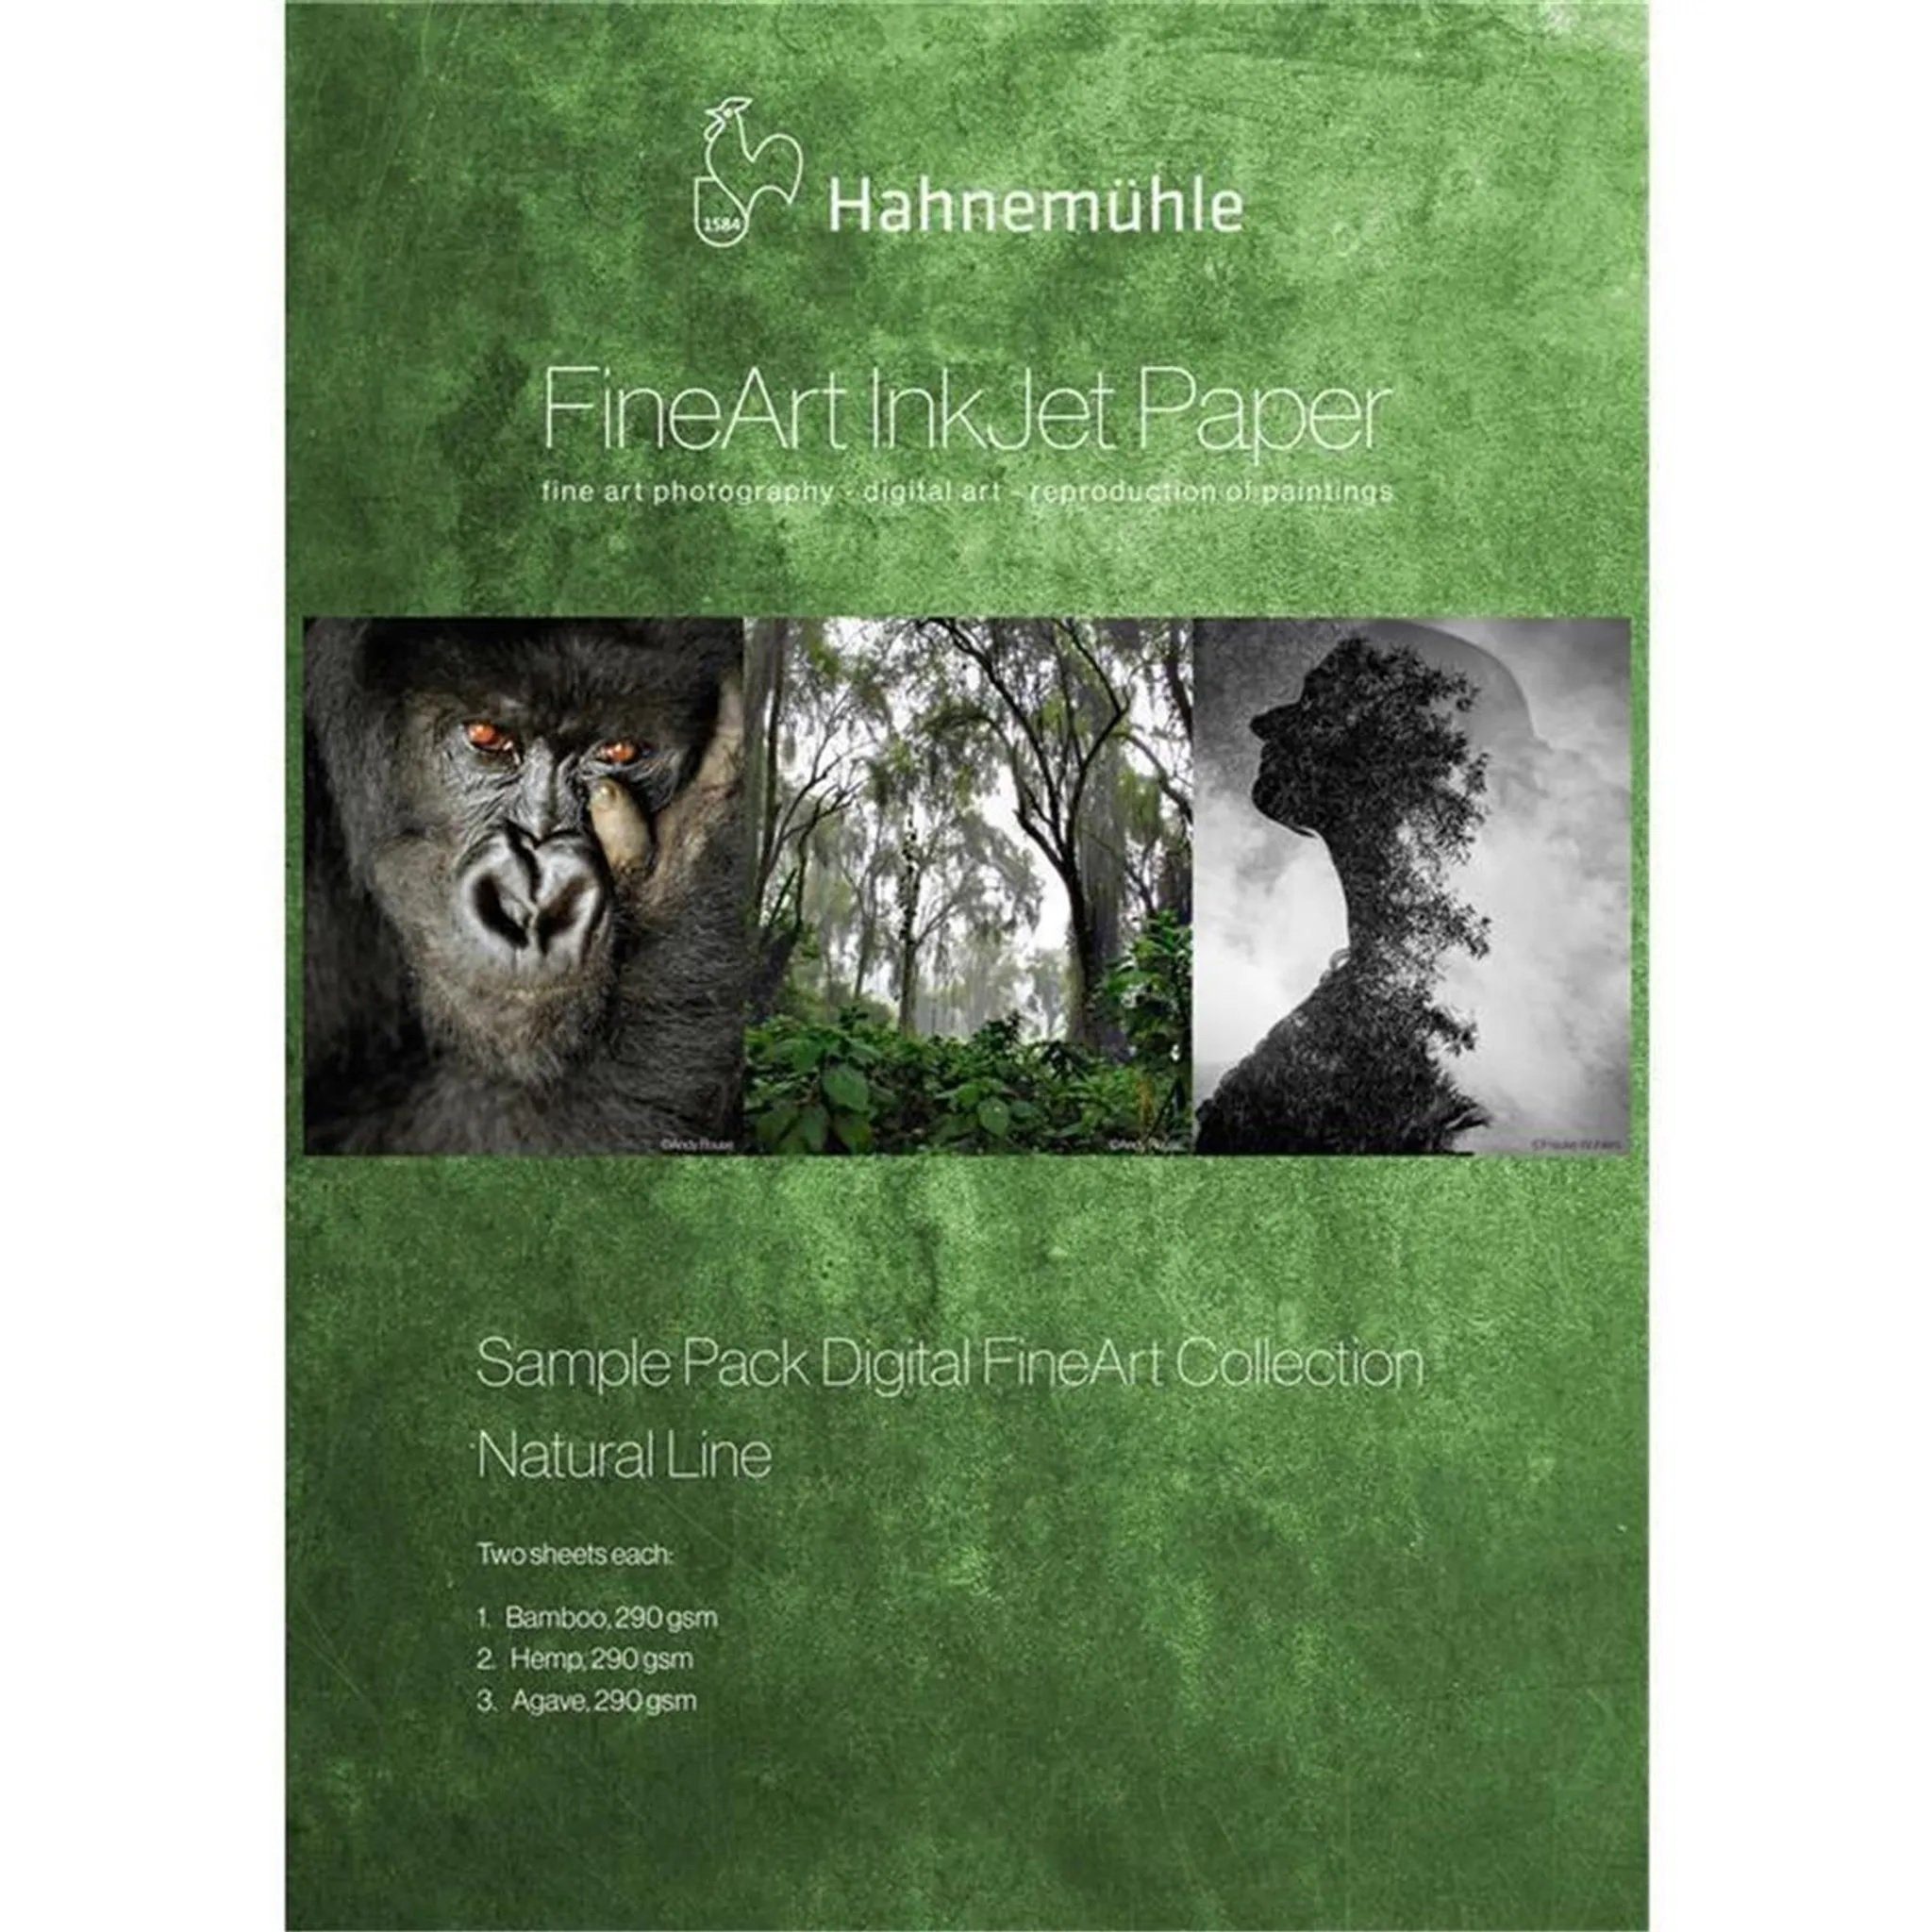 Hahnemühle Fotopapier Sample Pack A4 Digital FineArt Collection Natural Line, Set zum ausprobieren